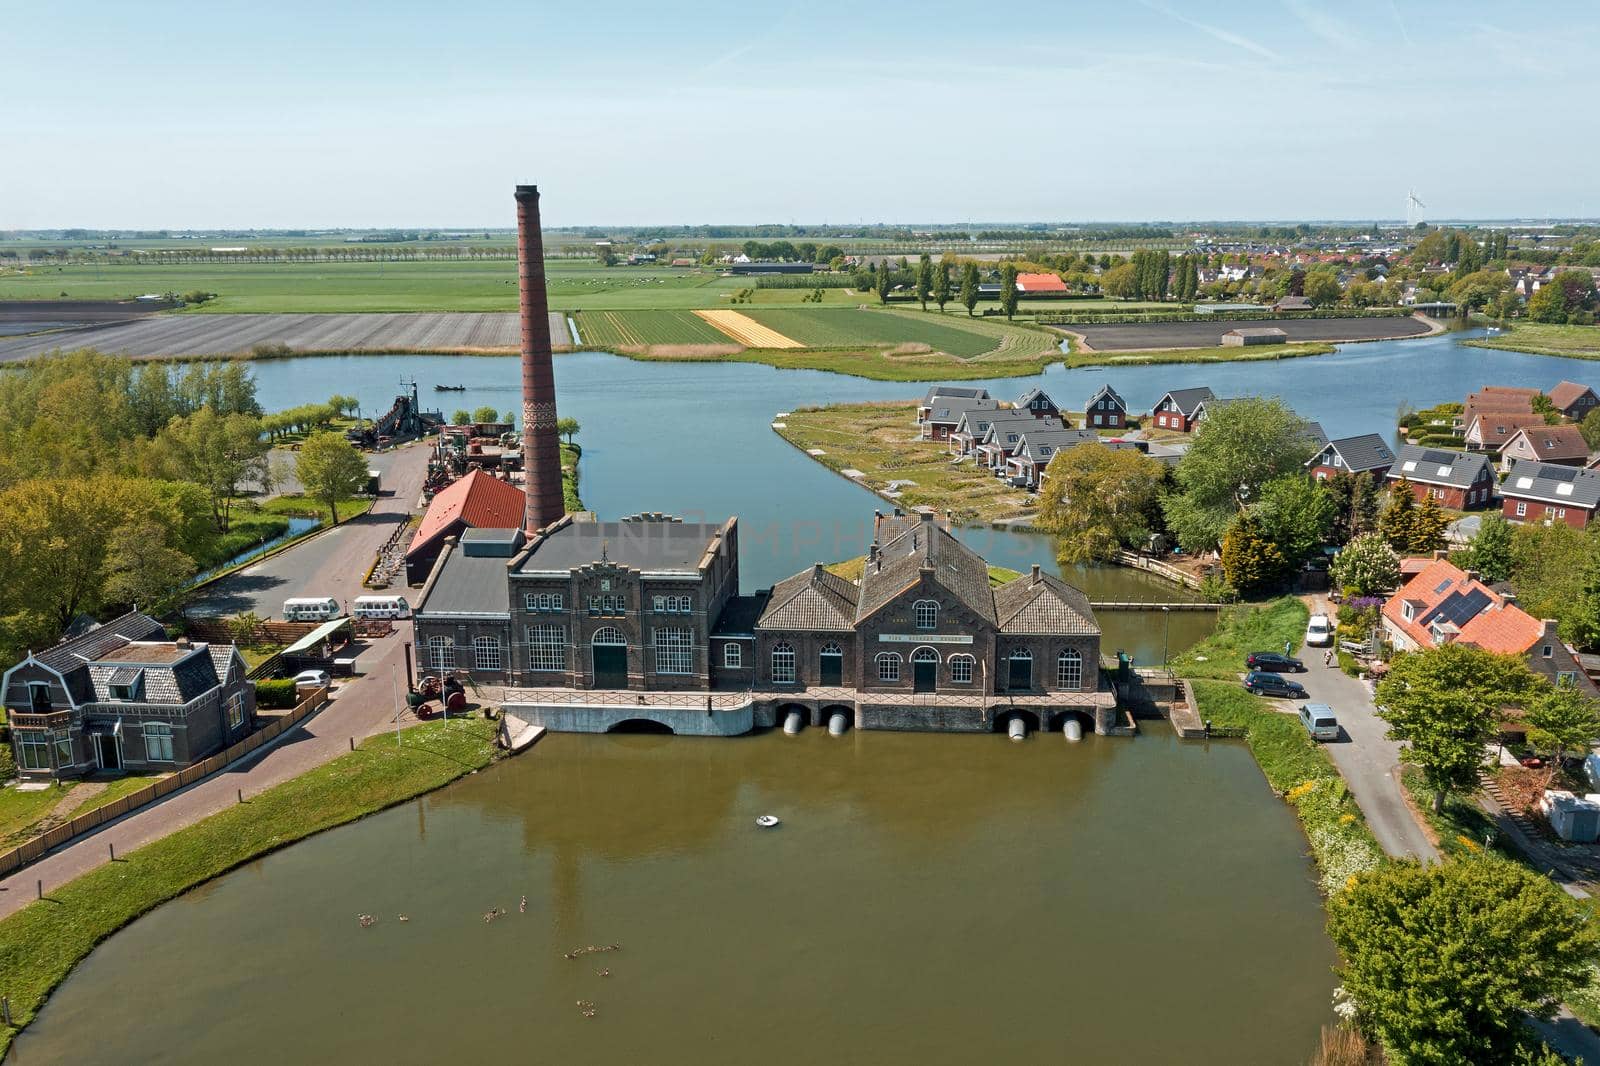 Aerial from the steam pumping station Vier Noorder Koggen in Wervershoof in the Netherlands by devy